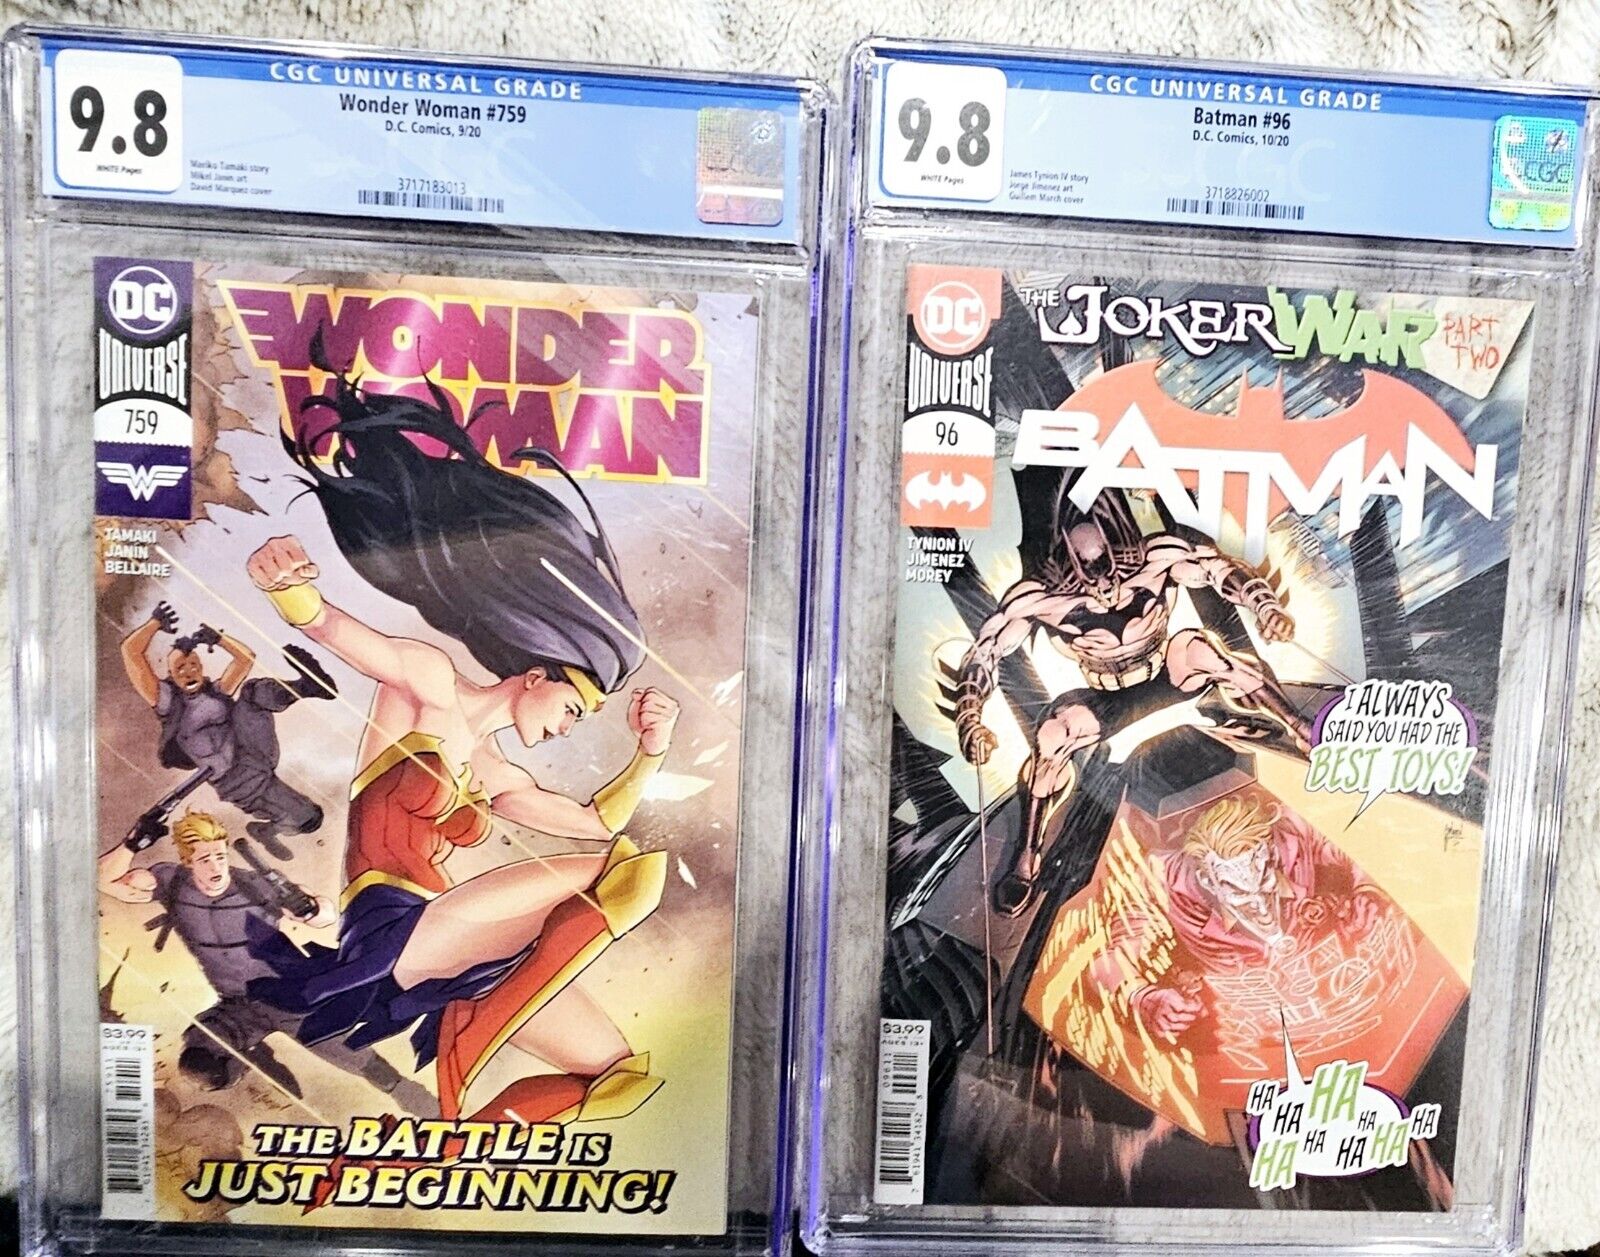 Batman #96 & Wonder Woman #759Comic Both CGC9.8 Comics 4 Sale Collectible Comics